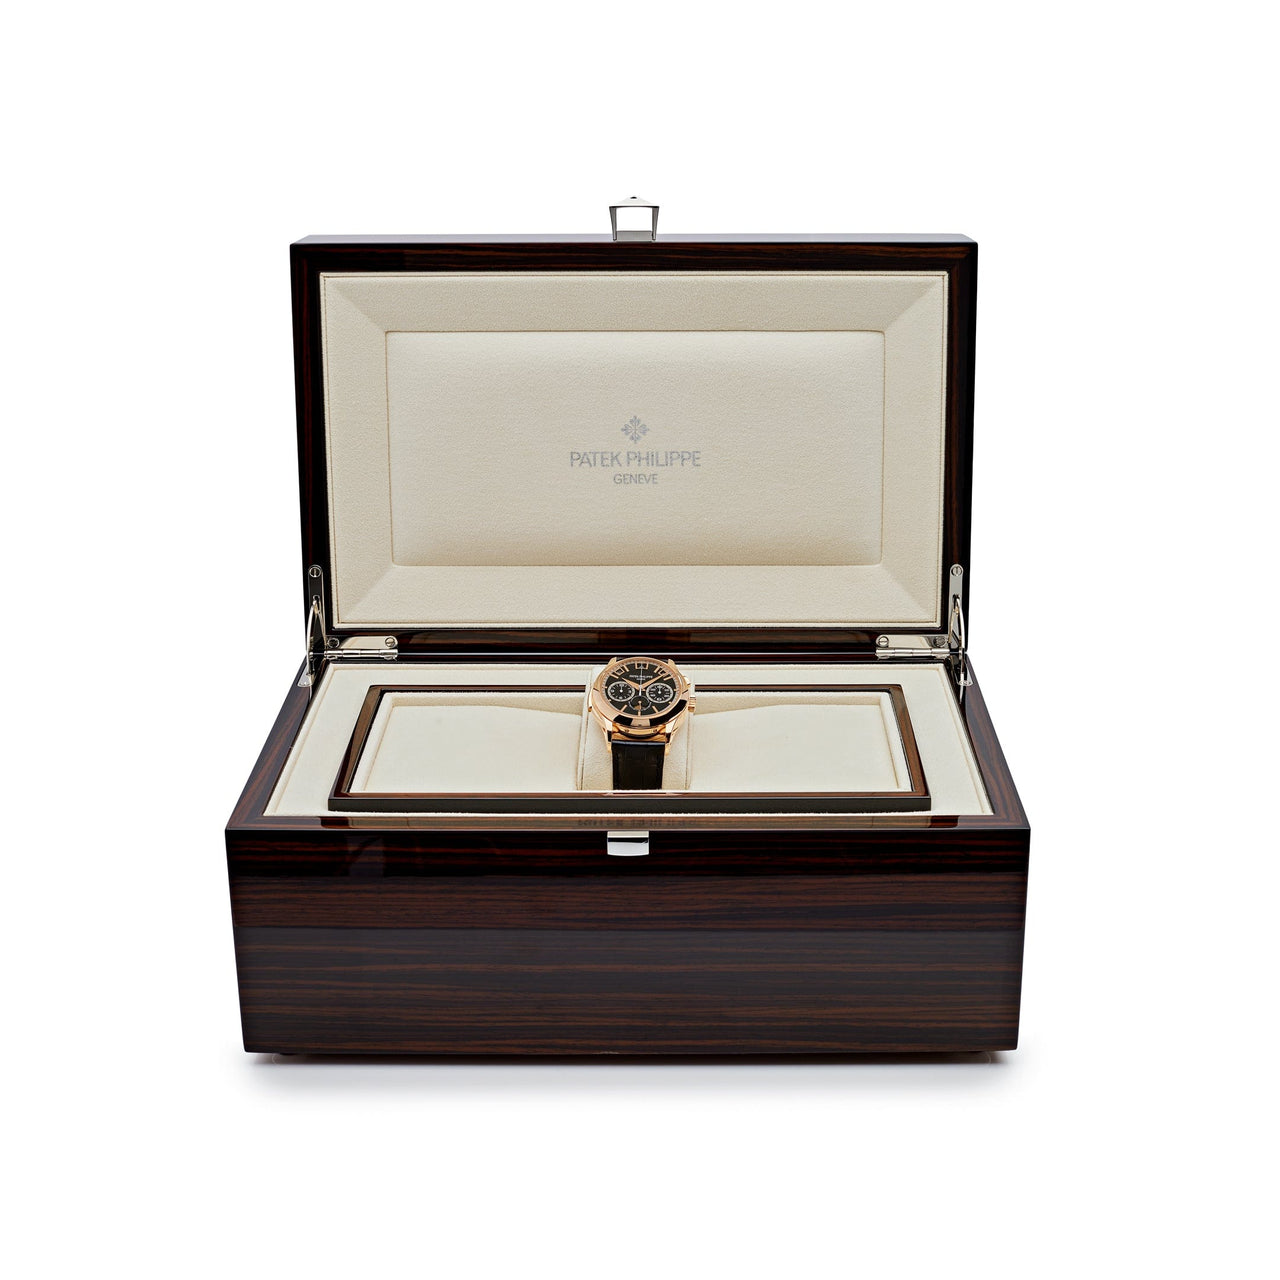 Luxury Watch Patek Philippe Grand Complications Minute Repeater Perpetual Calendar Rose Gold Black Dial 5208R-001 Wrist Aficionado